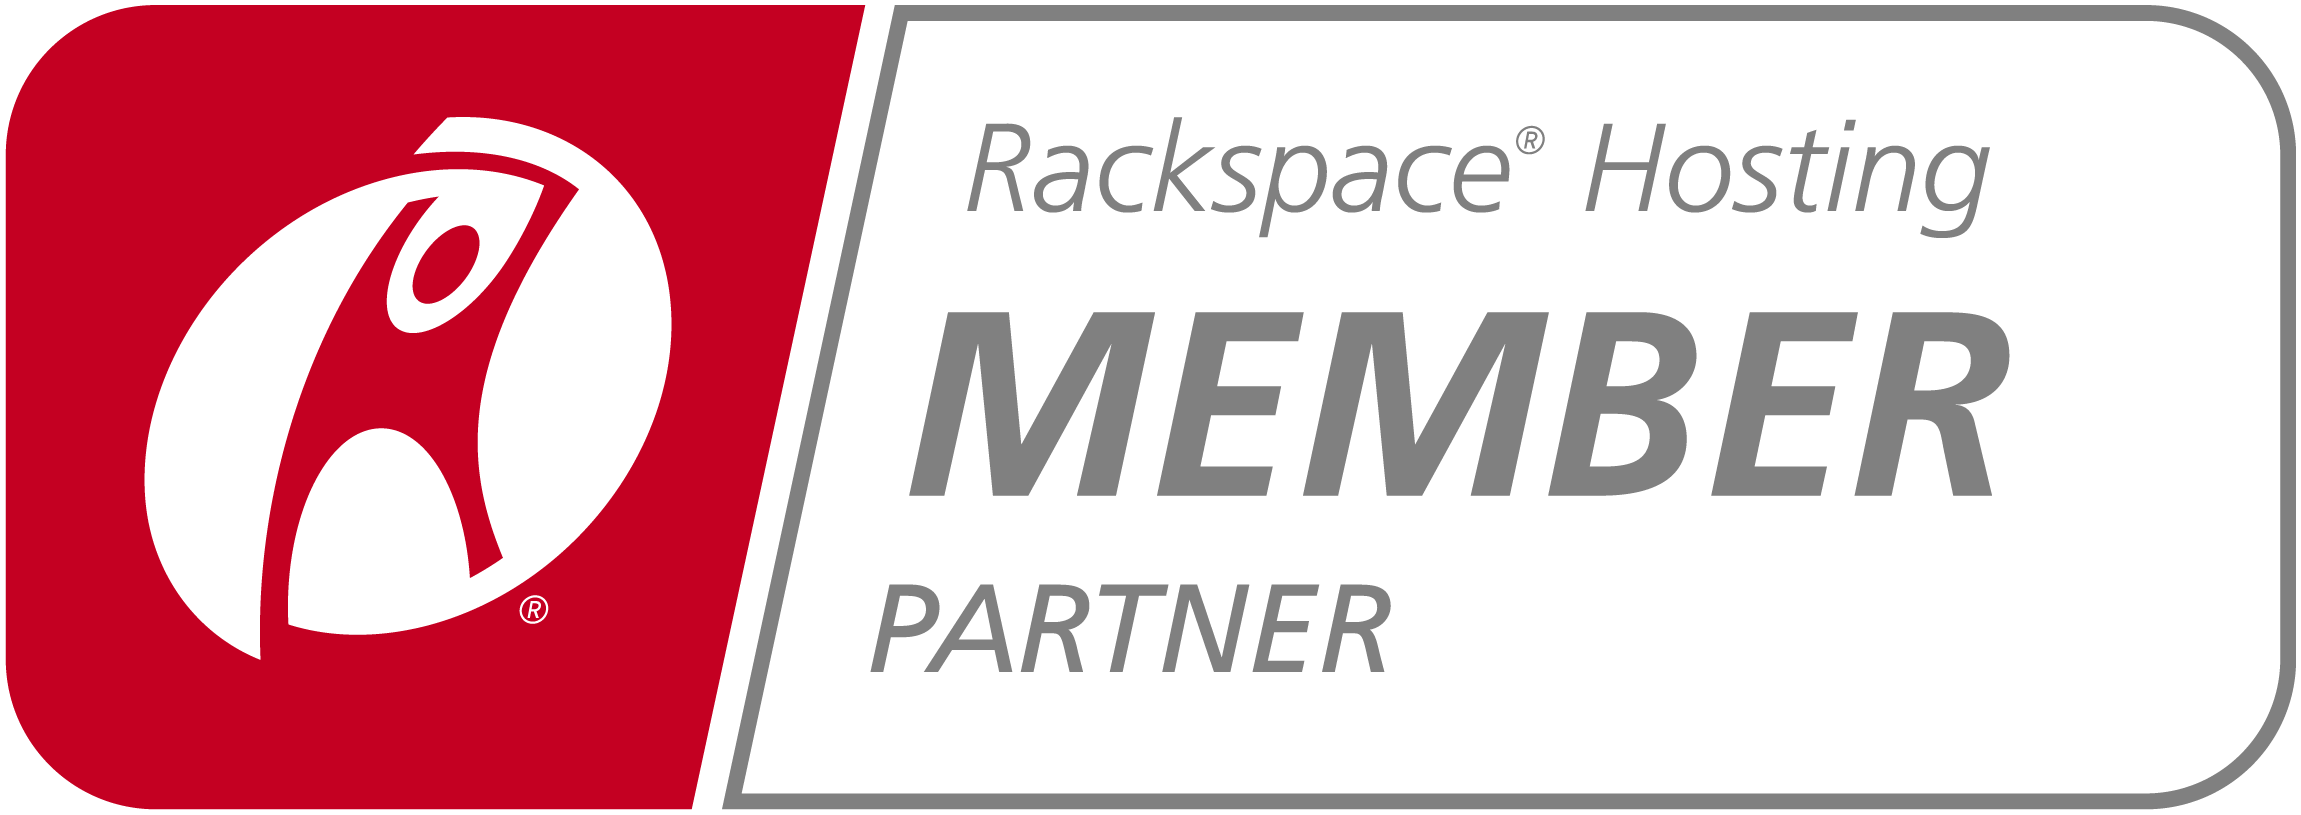 Rack Space Partner